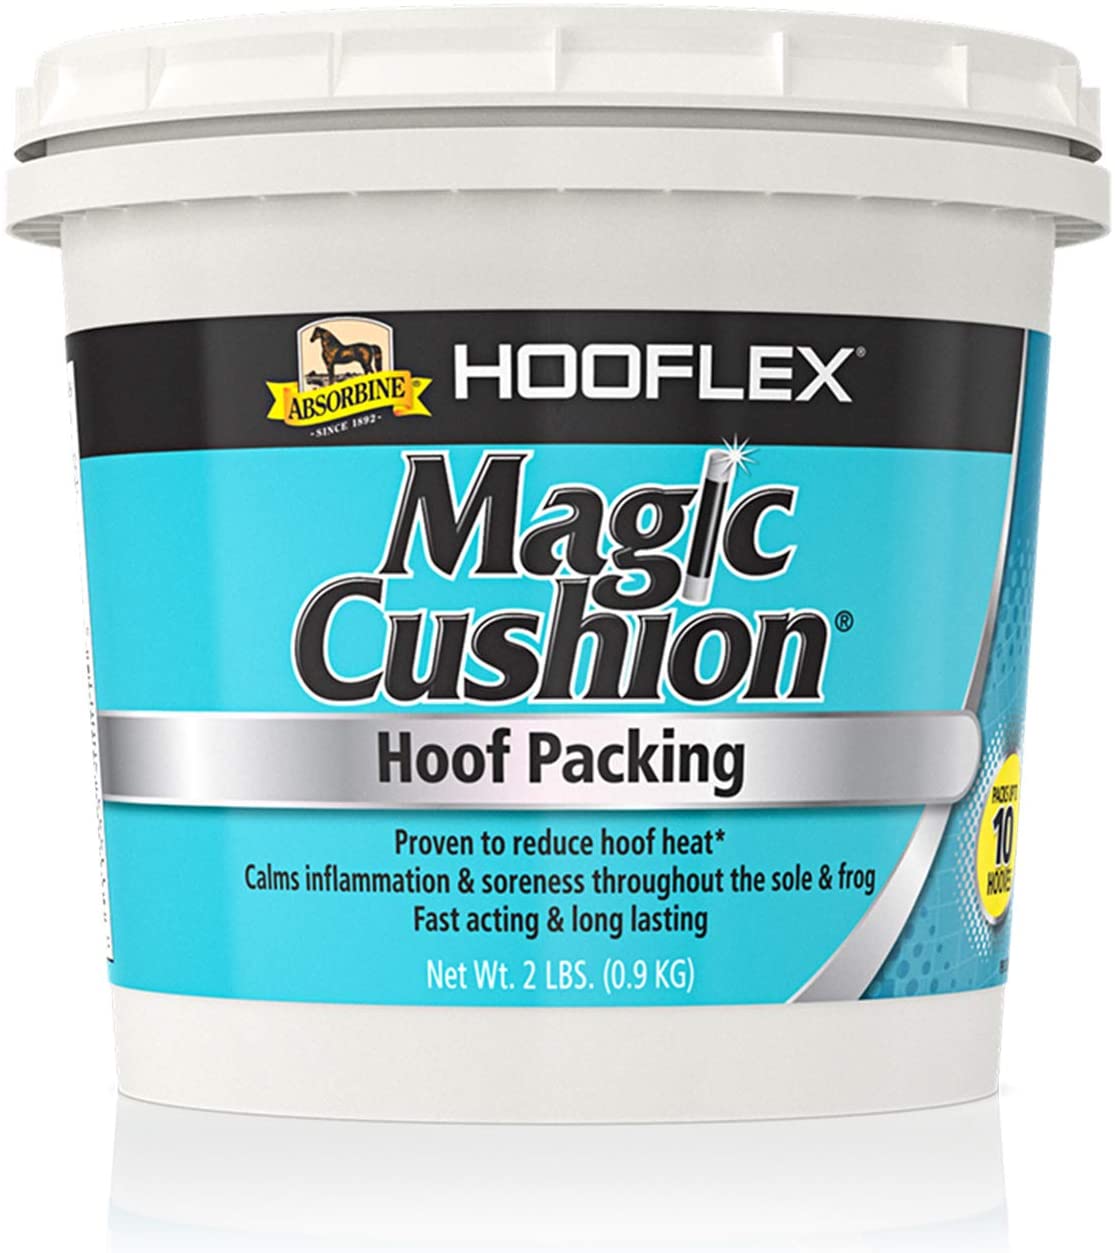 Absorbine Hooflex Magic Cushion Hoof Packing Tub